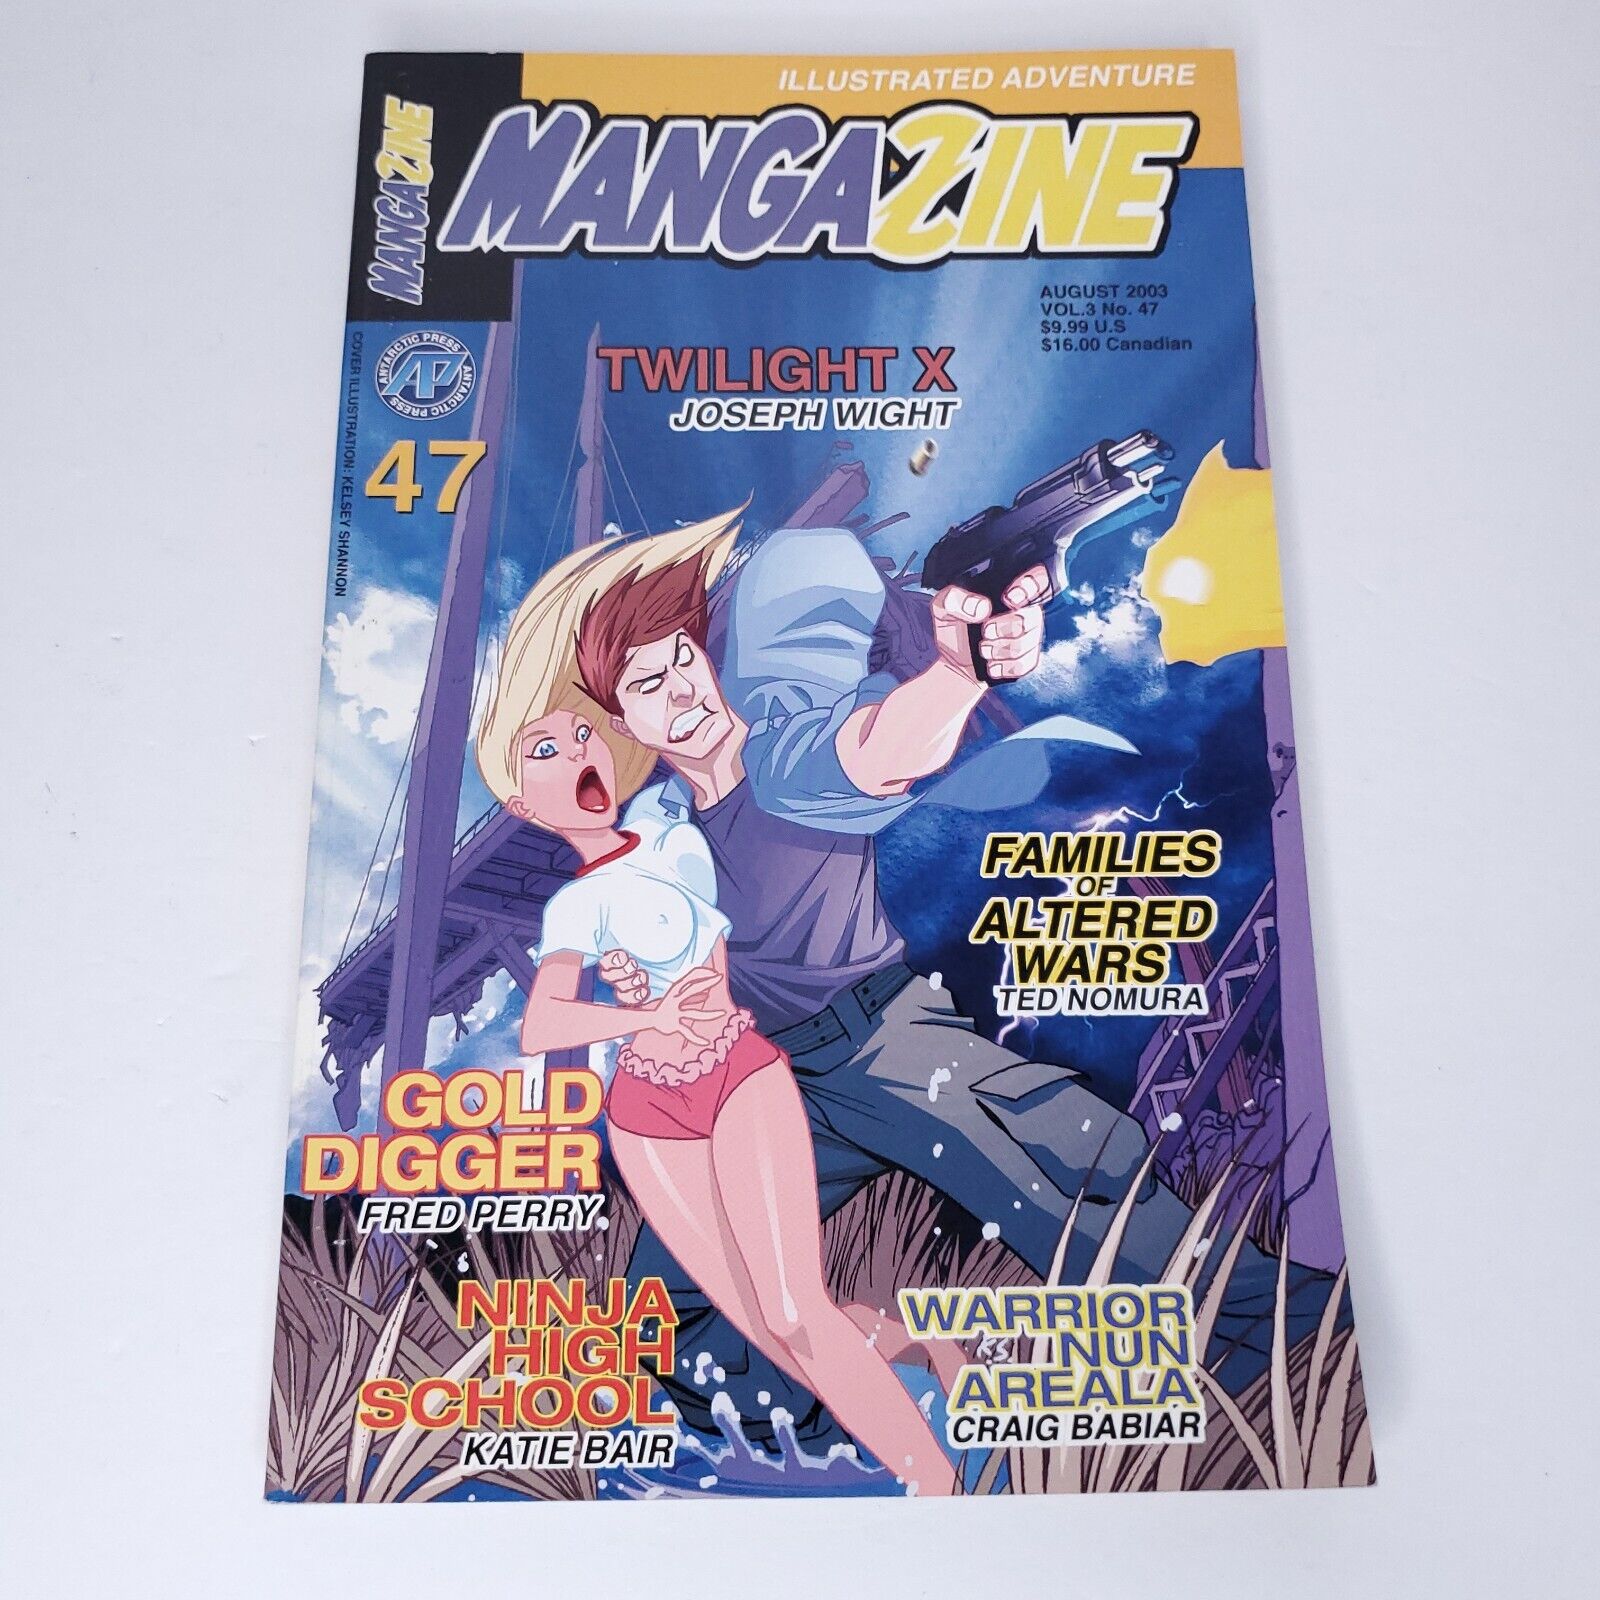 Mangazine August 2003 Vol 3 #47 Antarctic Illustrated Comic Anime Magazine